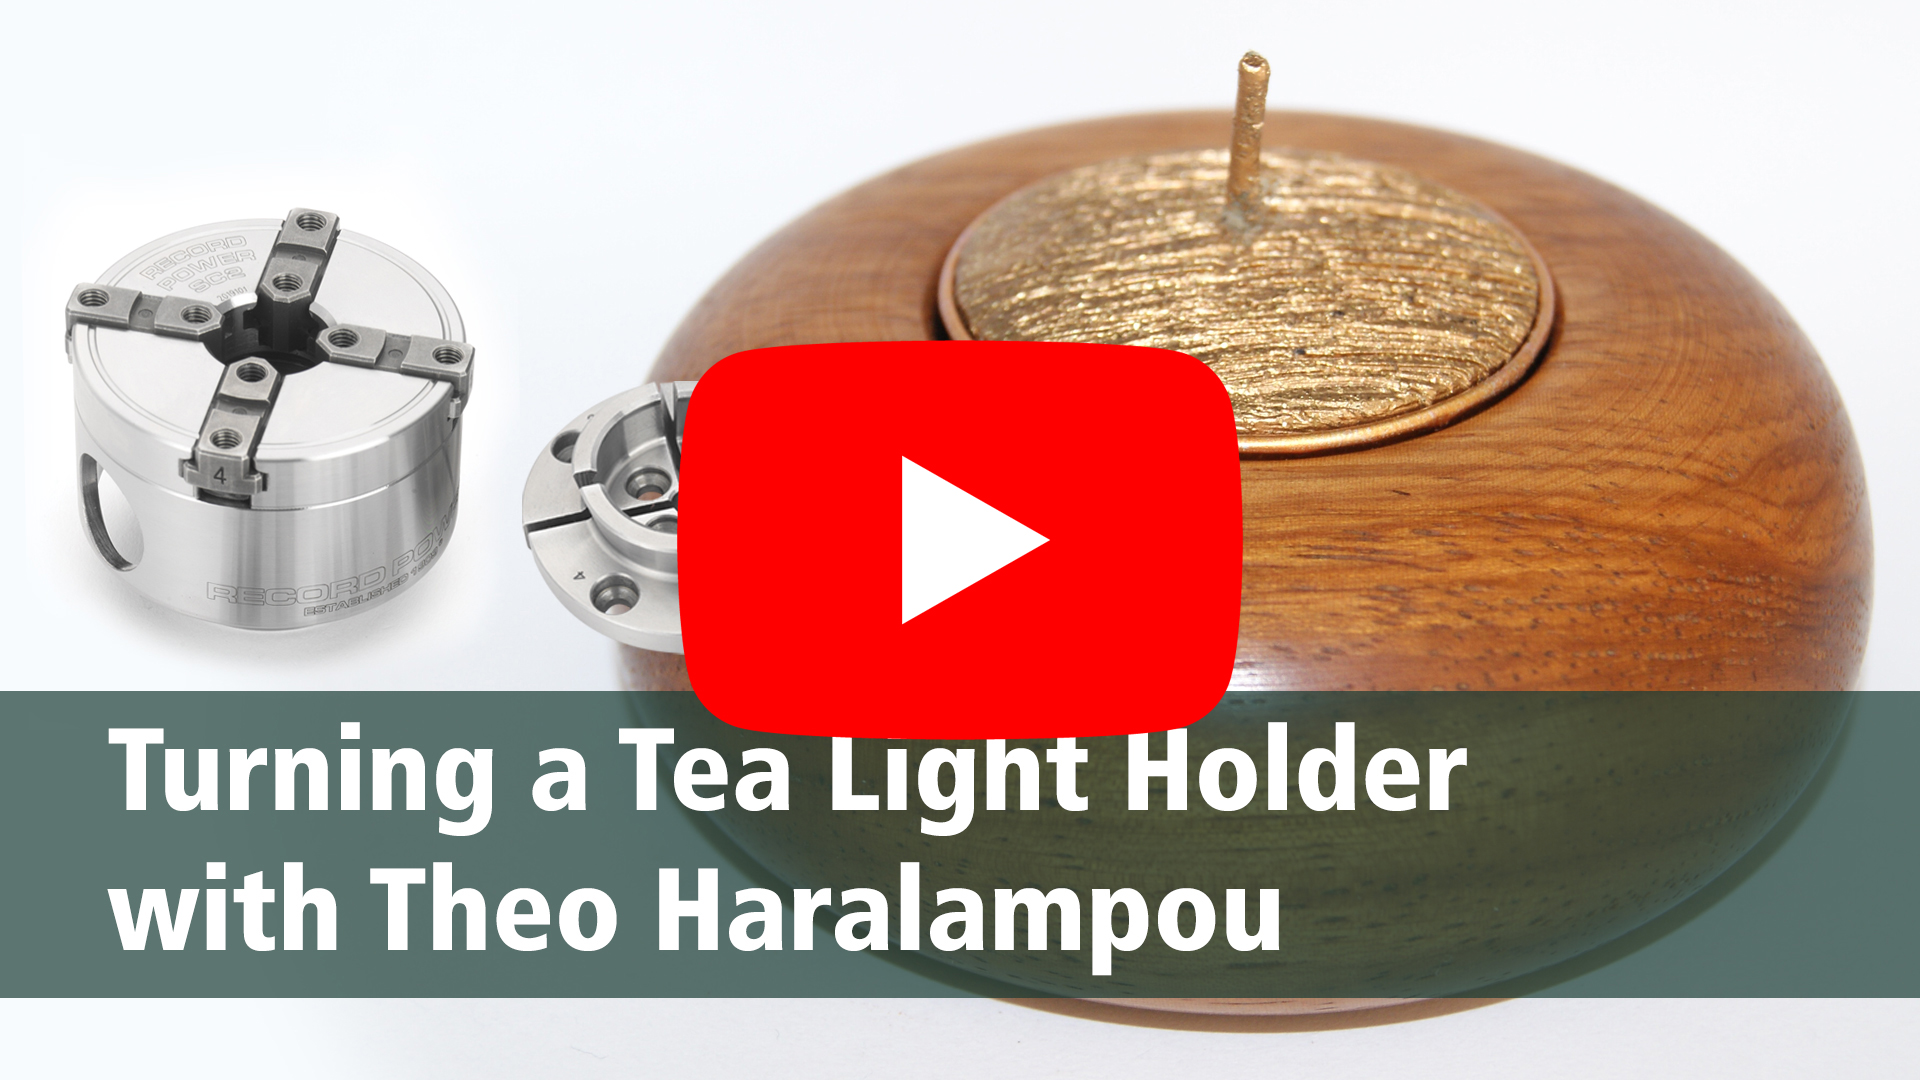 Mini Chucks Project 1 with Theo Haralampou - Turning a Tea Light Holder